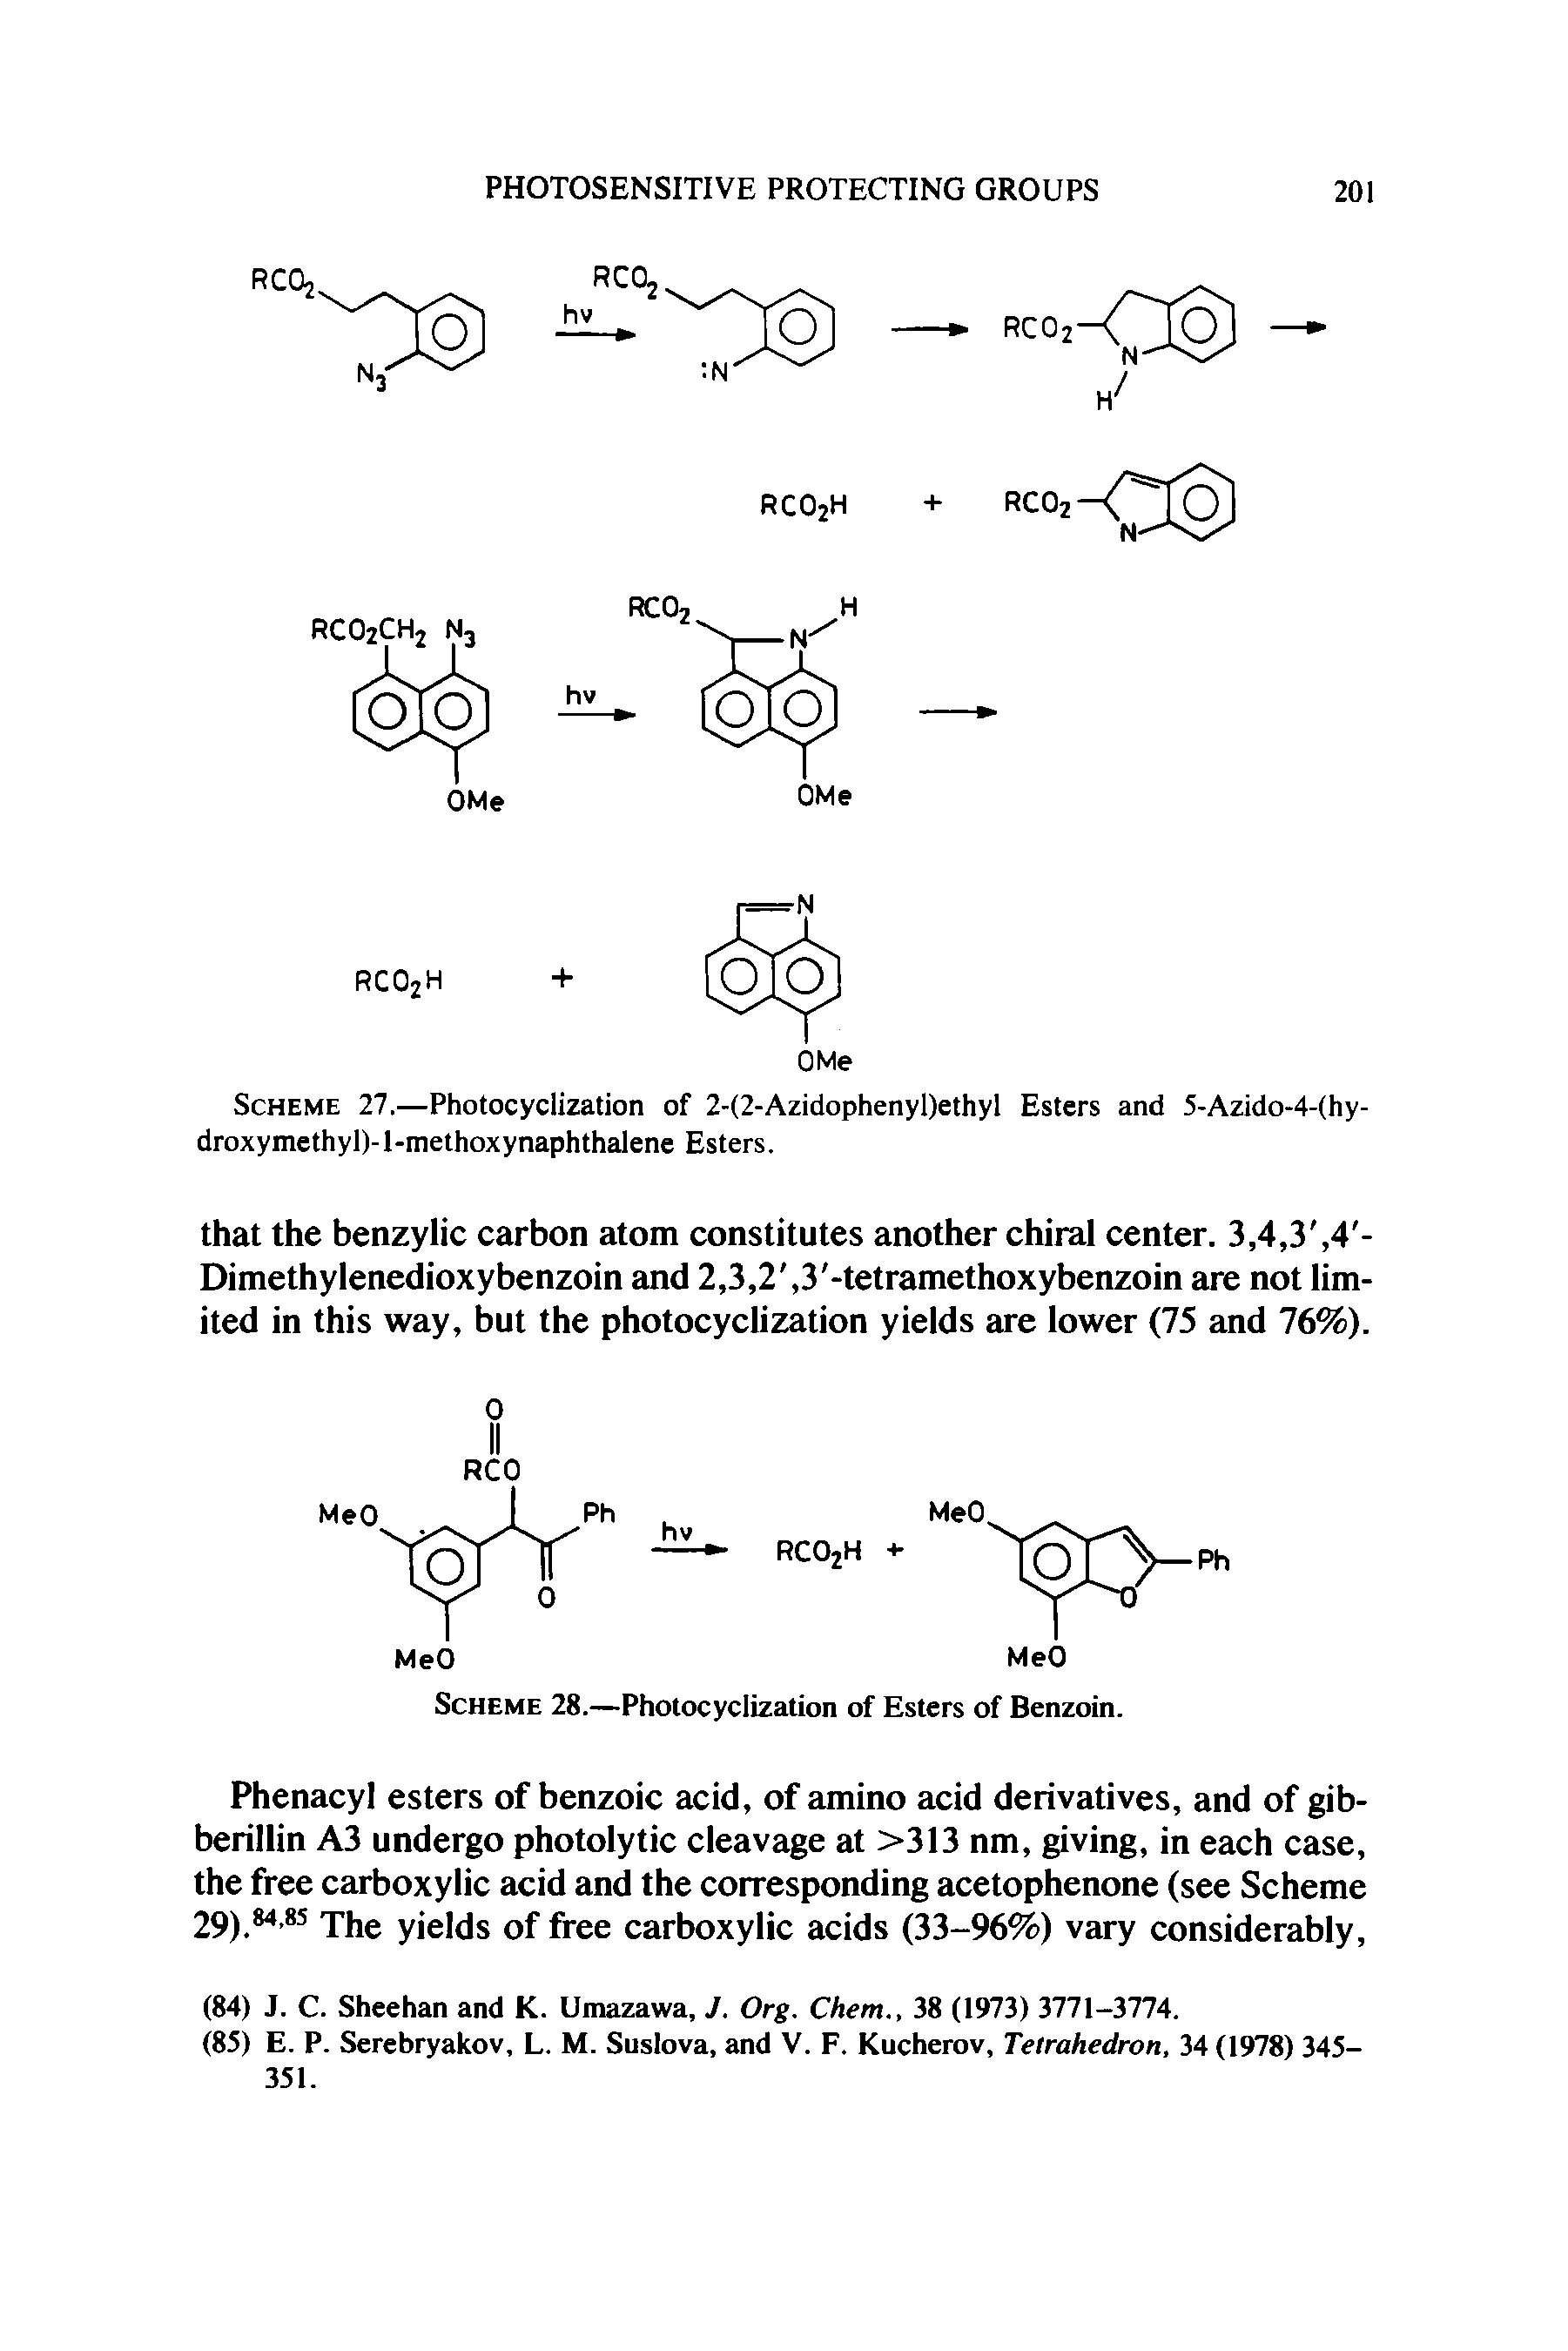 Scheme 27.—Photocyclization of 2-(2-Azidophenyl)ethyl Esters and 5-Azido-4-(hy-droxymethyl)-l-methoxynaphthalene Esters.